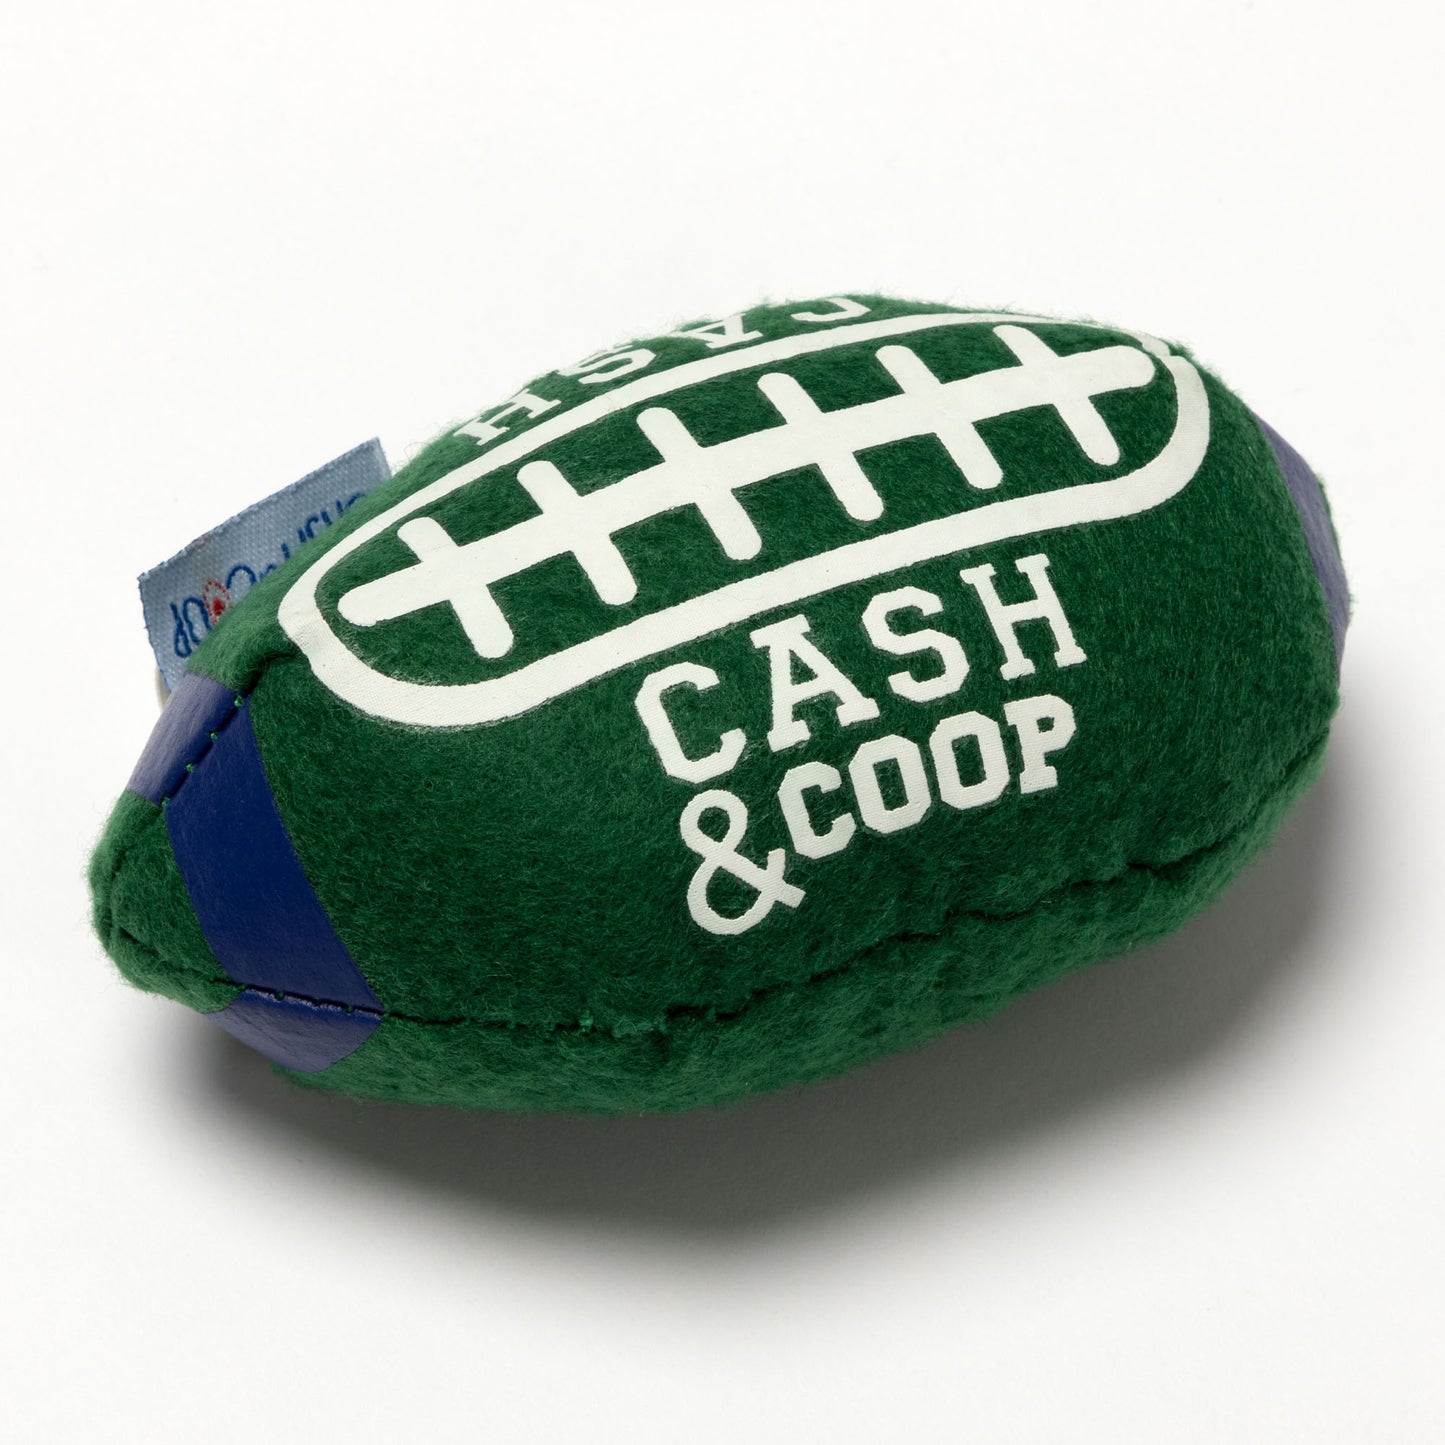 Cash & Coop Football Dog Toy